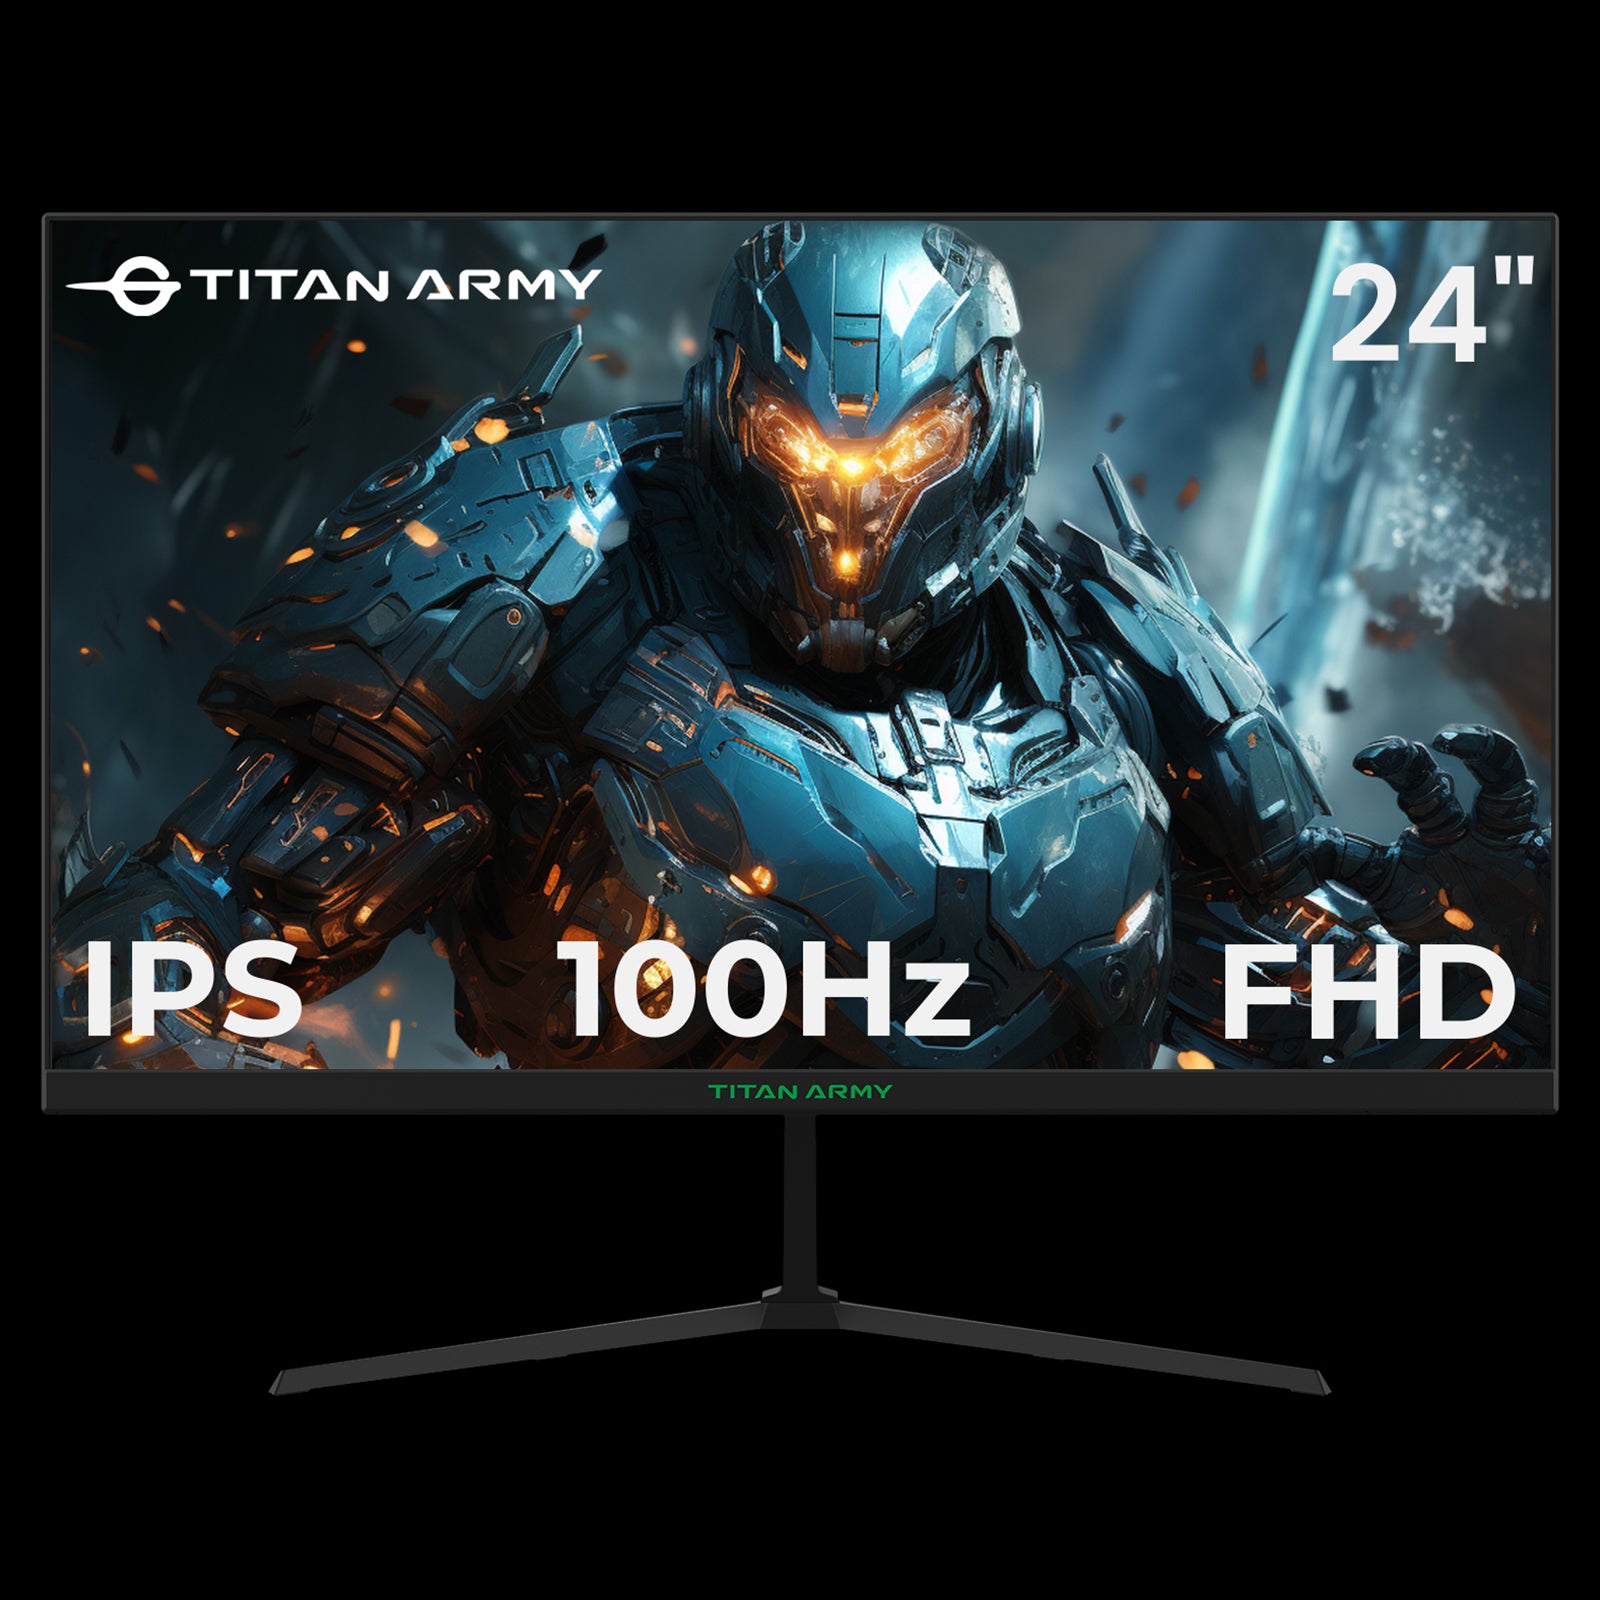 TITAN ARMY P24H2P Gaming Monitor